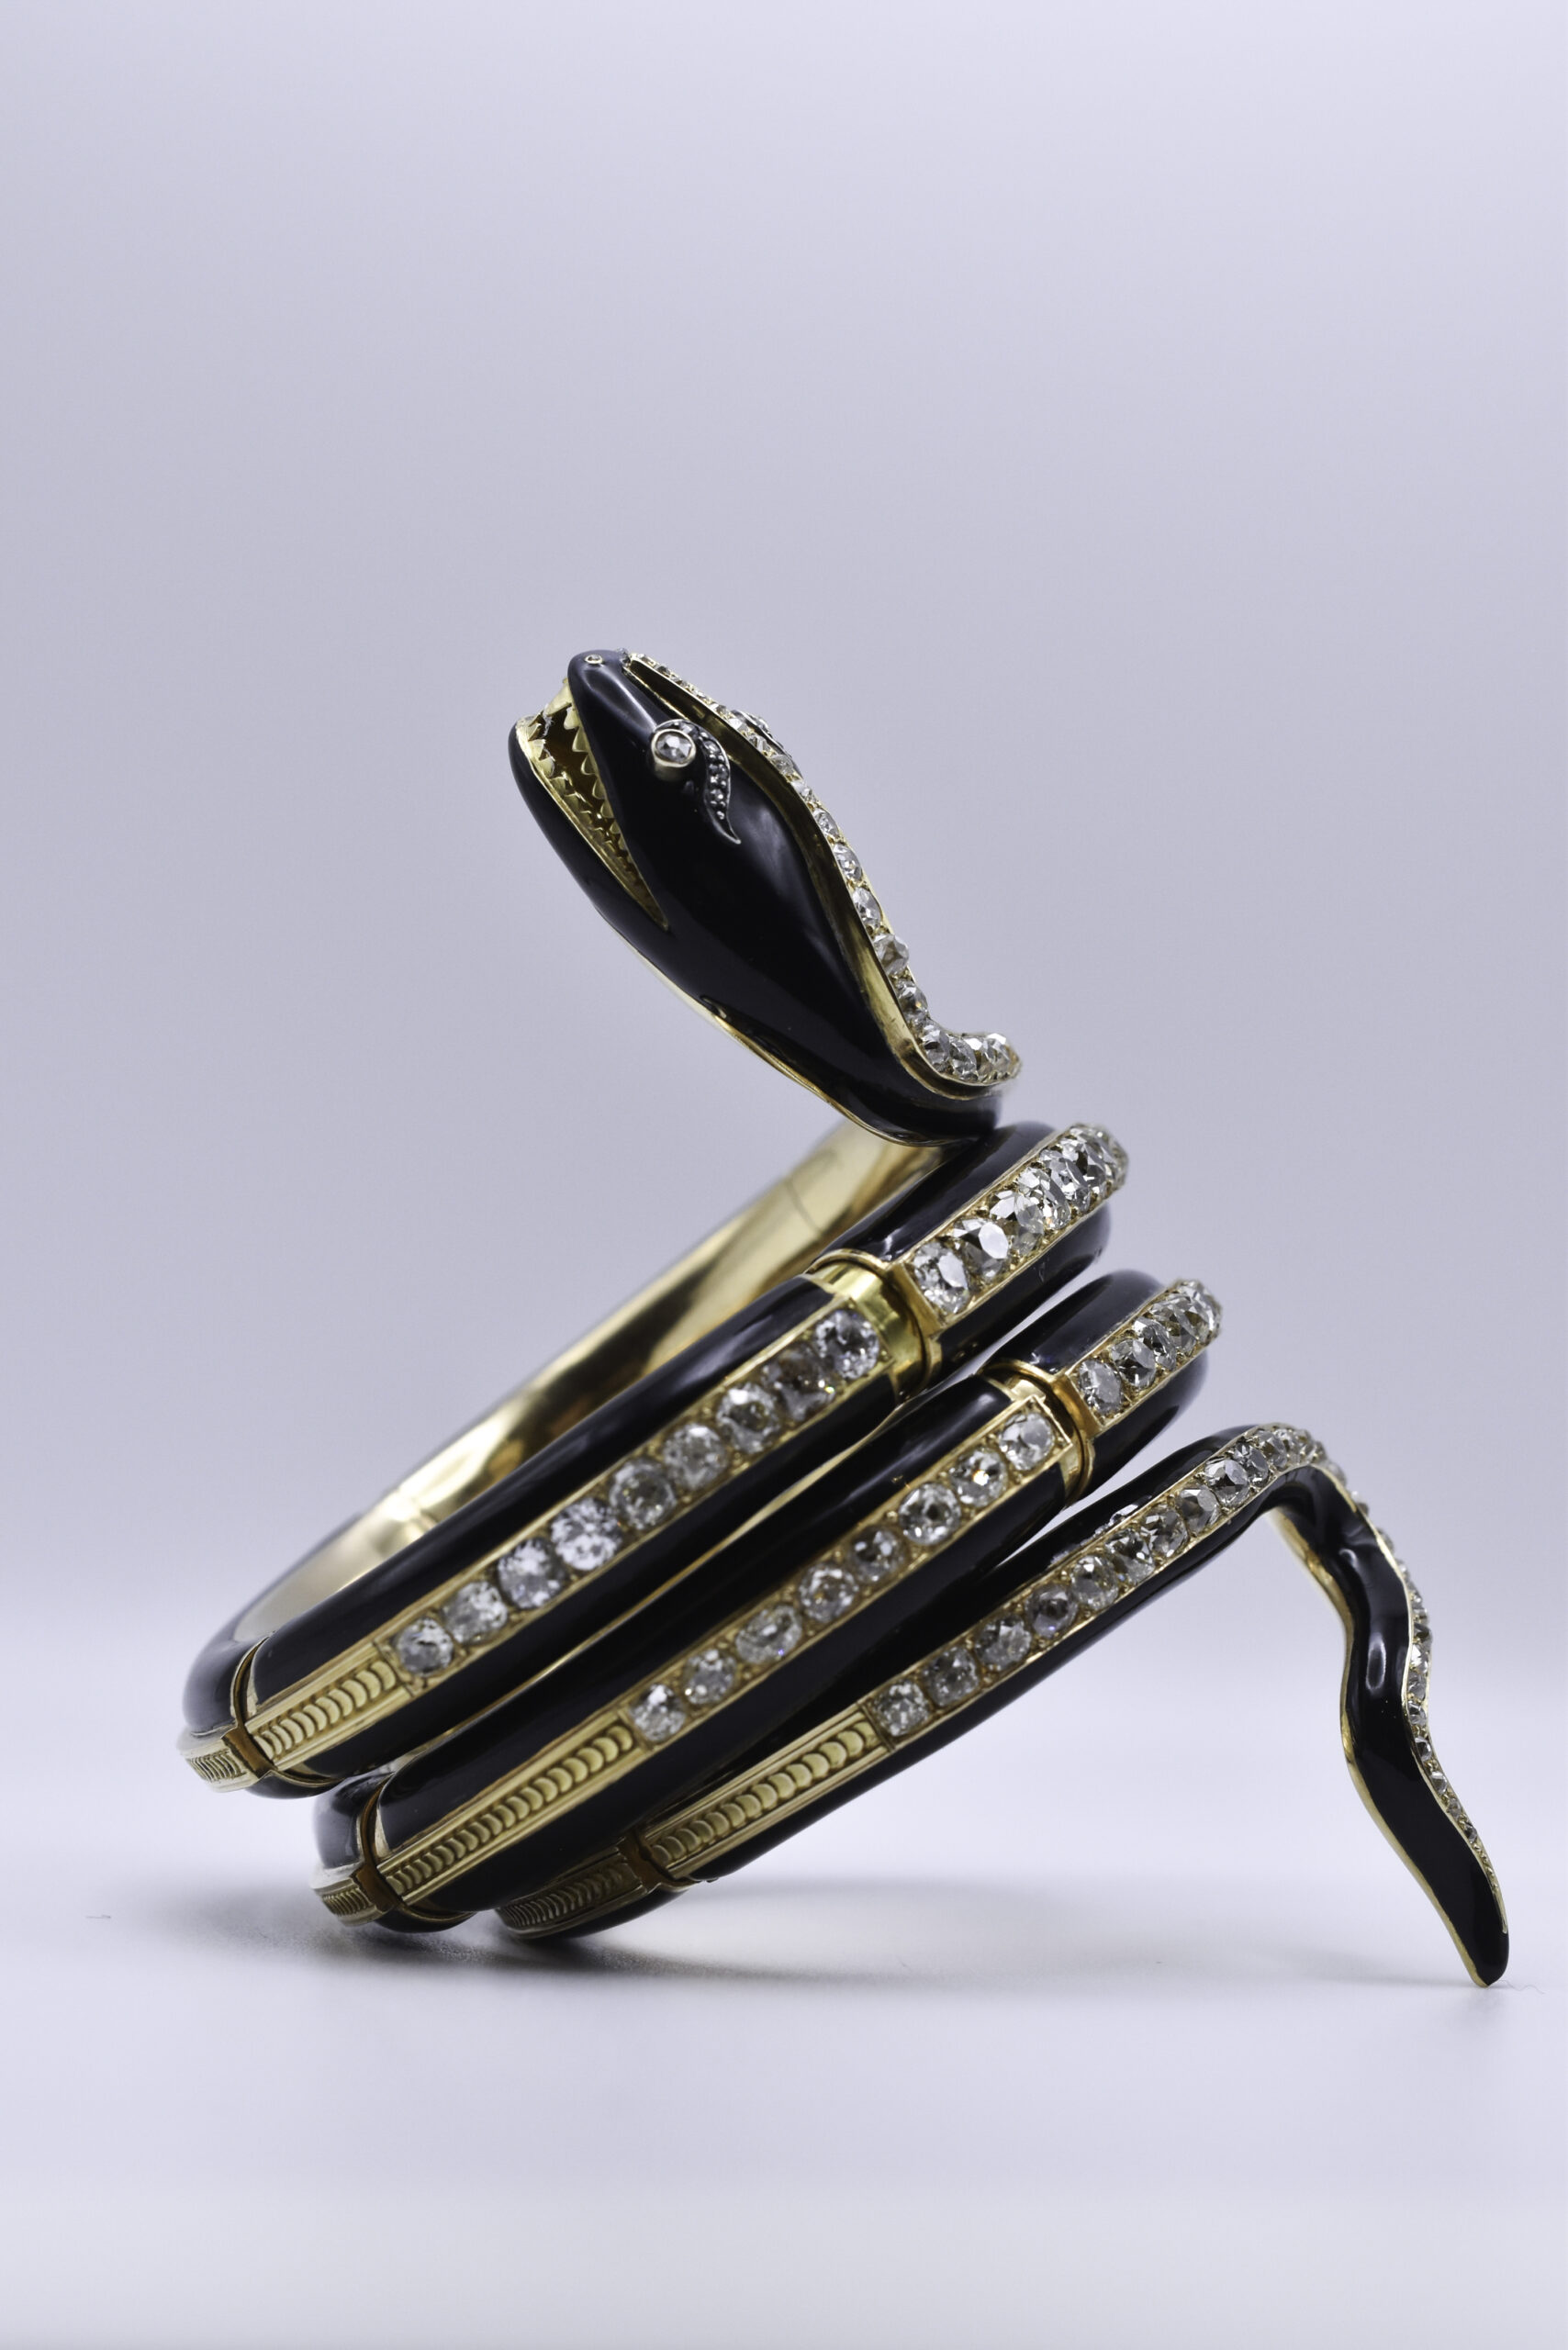 Victorian Retrospective Coiled Serpent Bracelet